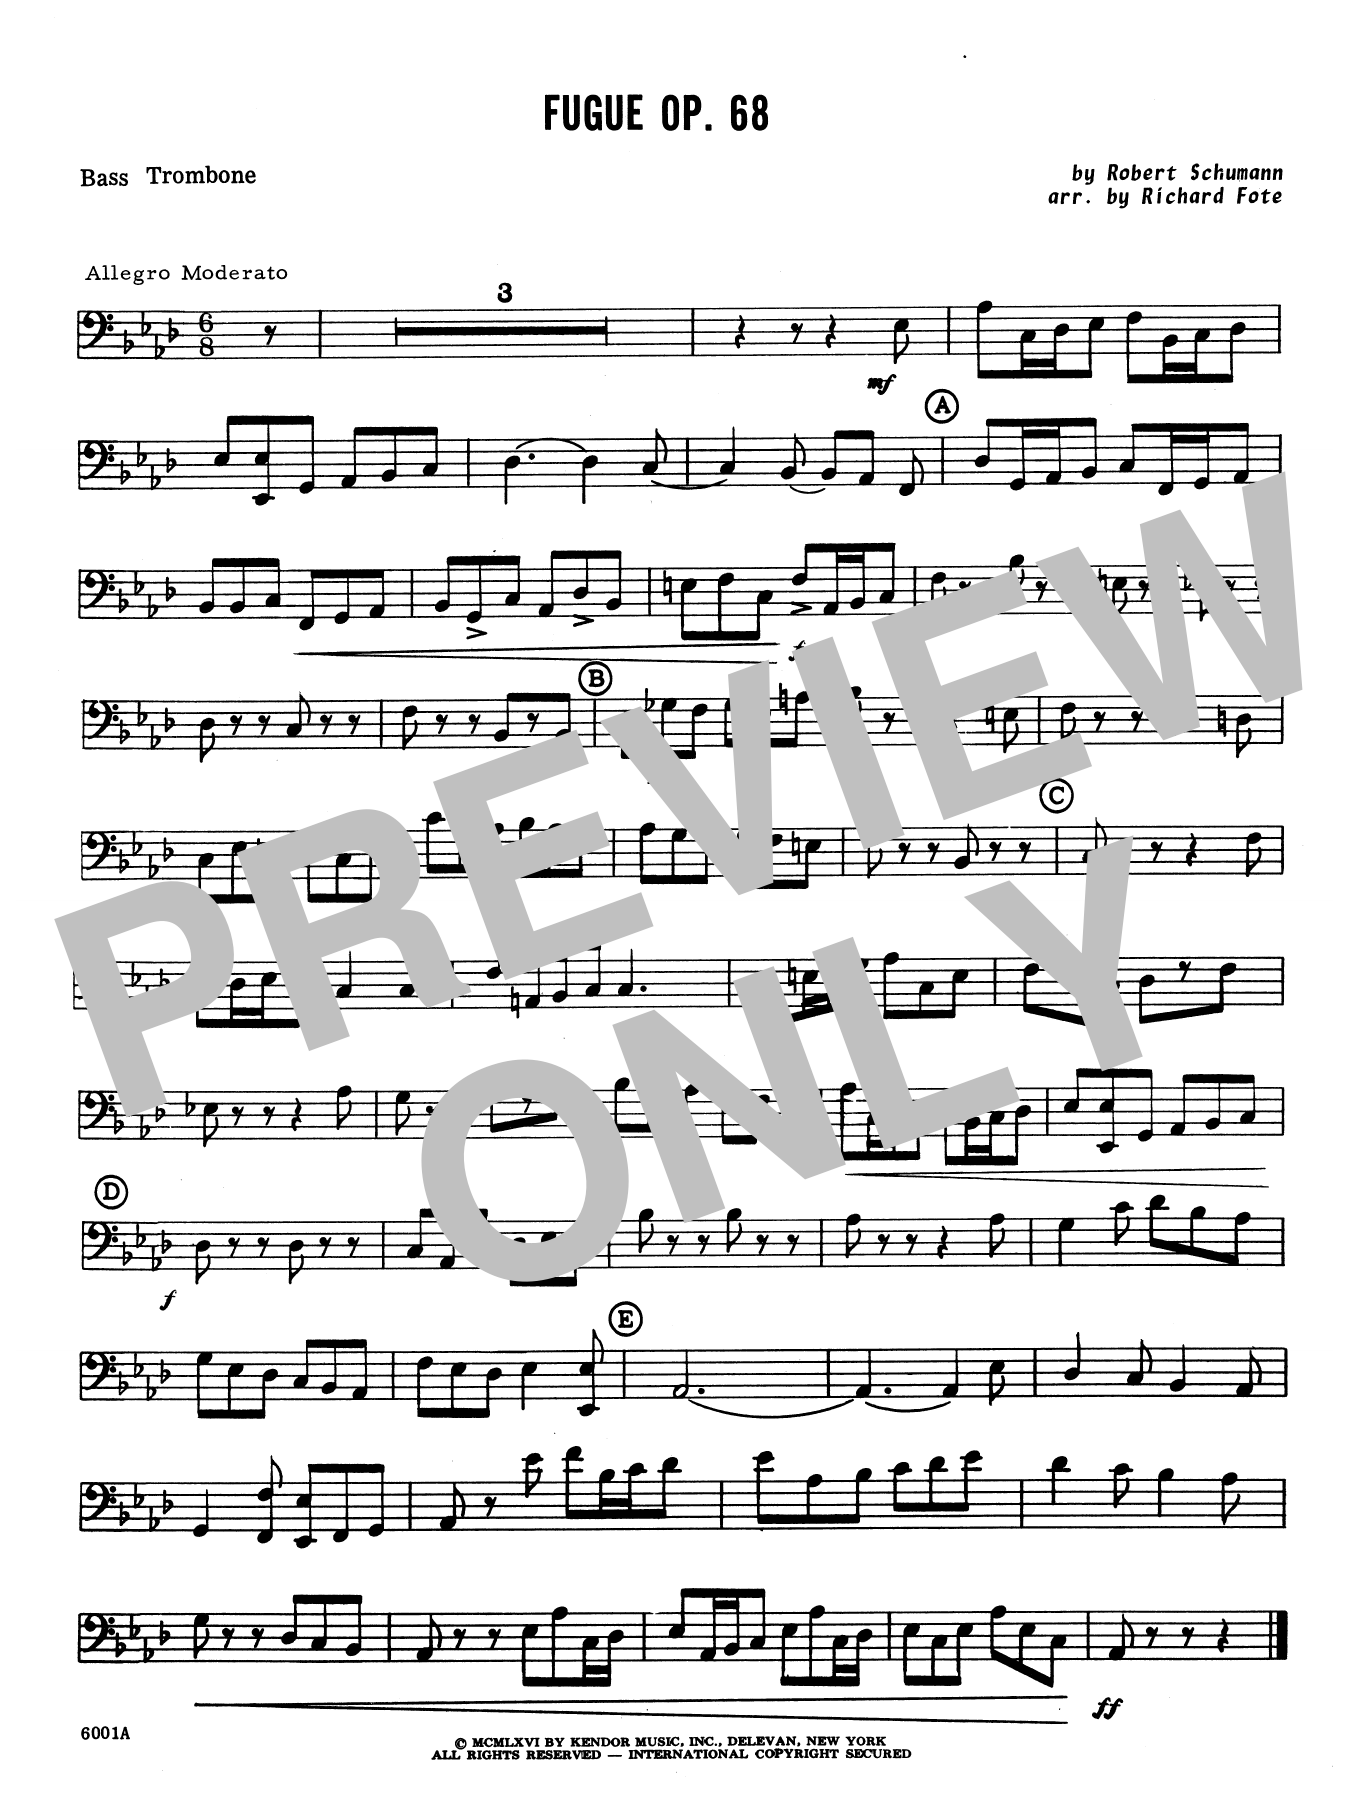 Download Richard Fote Fugue/Opus 68 - Bass Trombone Sheet Music